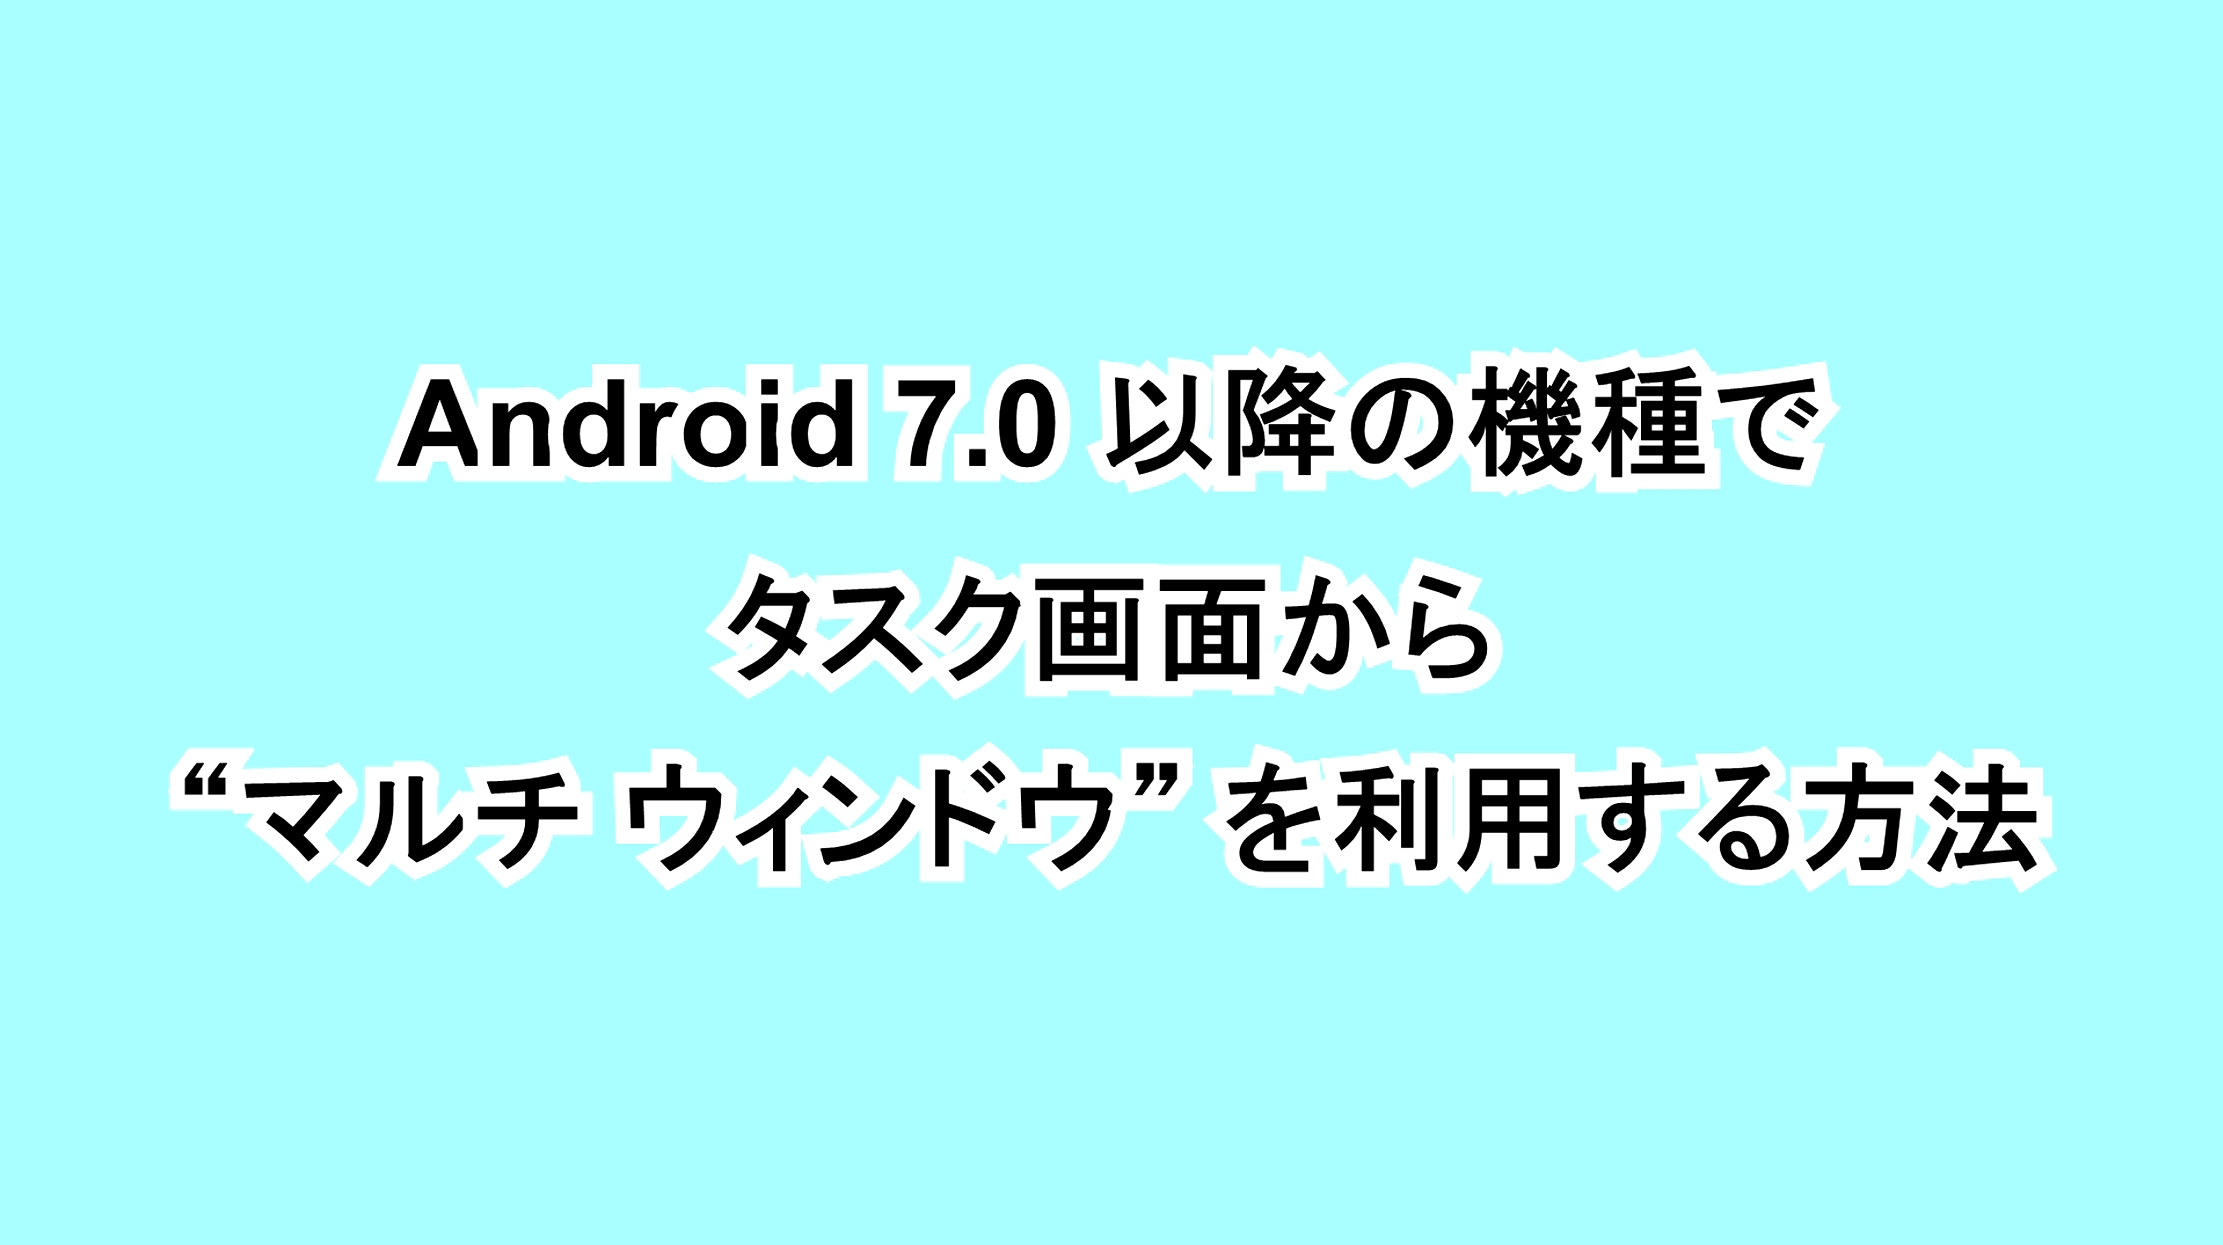 Android 7.0以降の機種でタスク画面から“マルチ ウィンドウ”を利用する方法